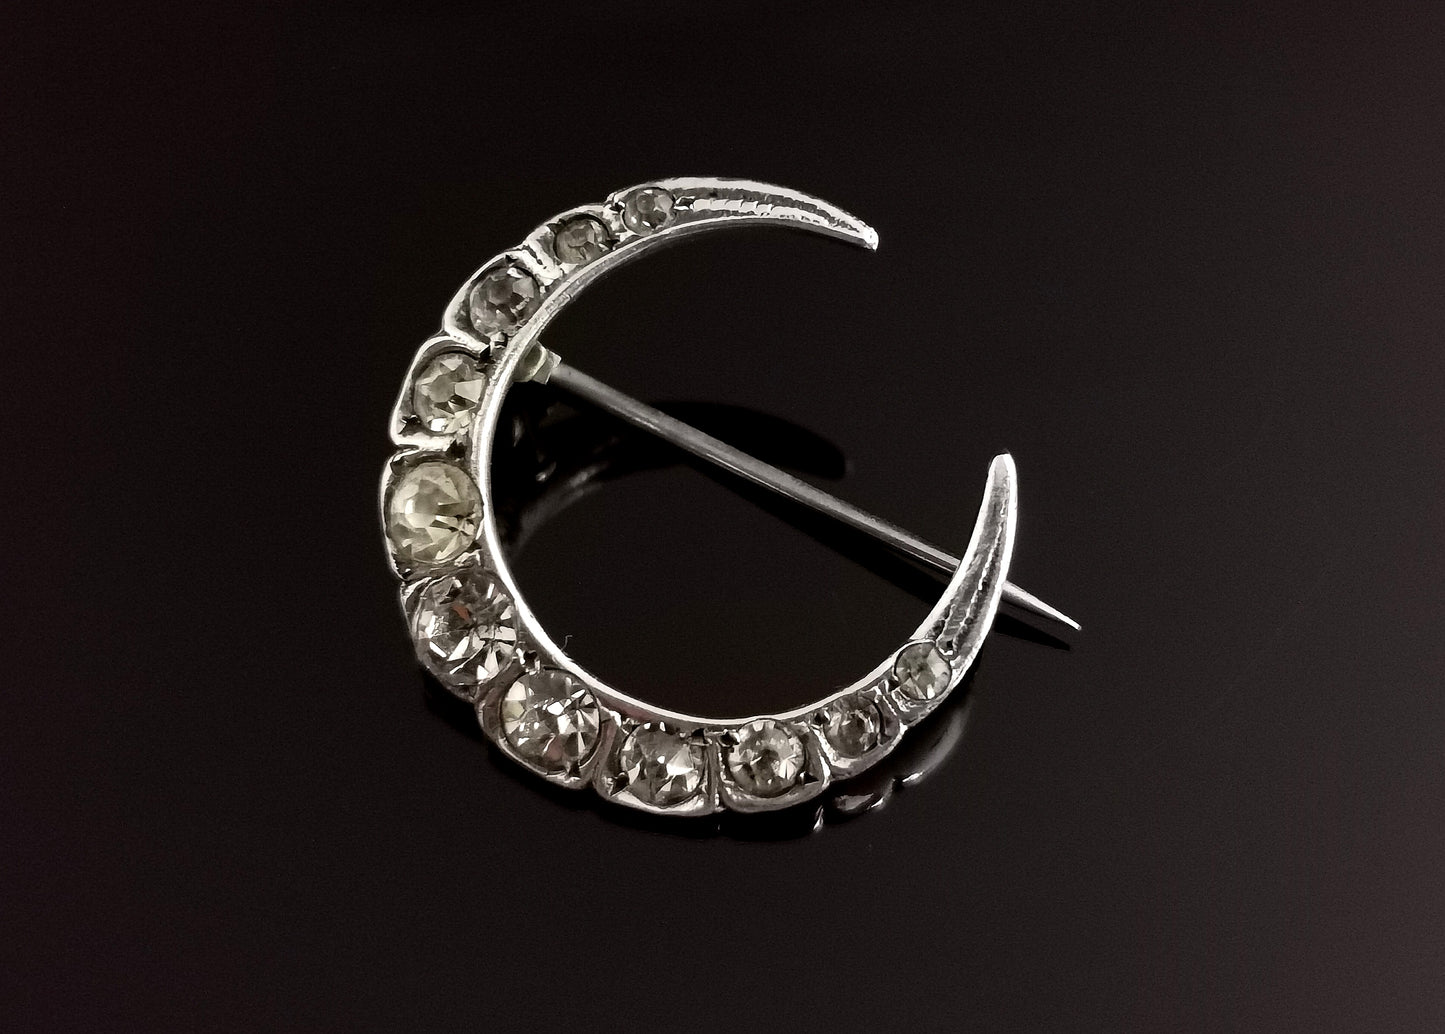 Antique Paste Crescent brooch, sterling silver